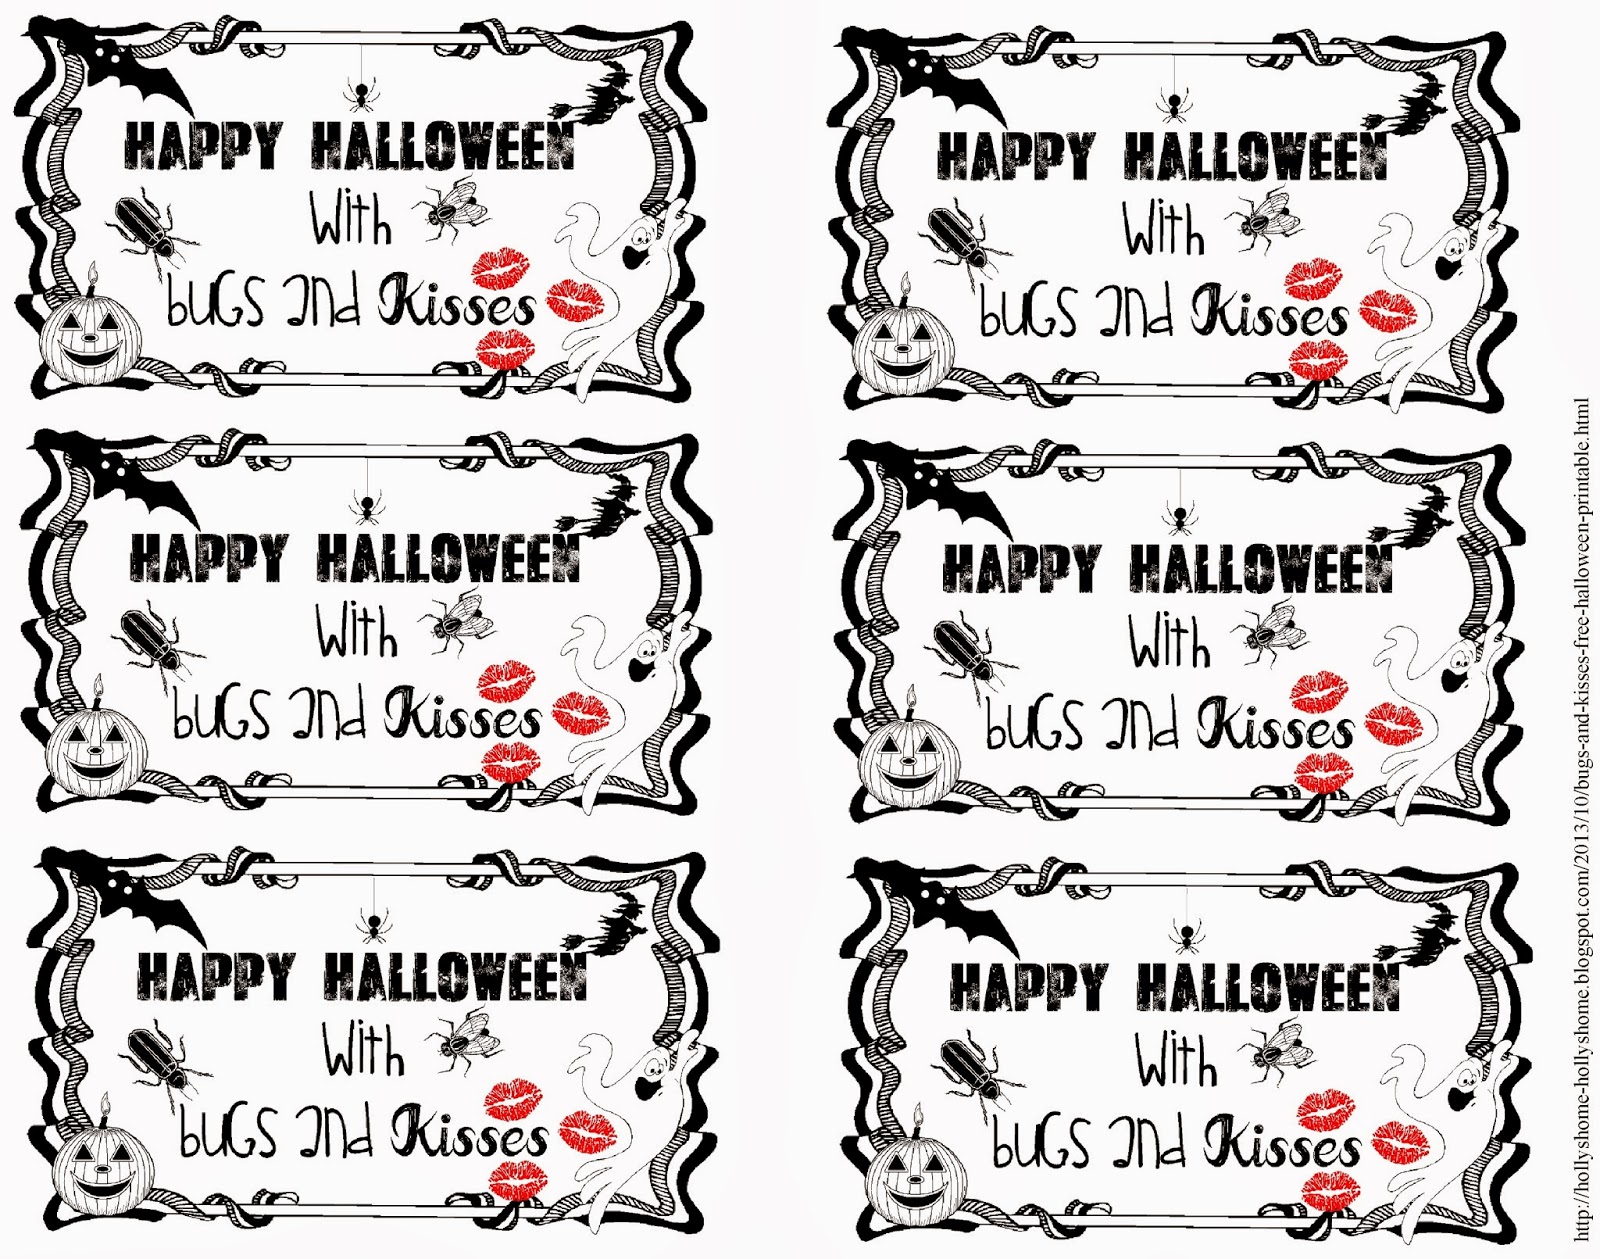 HollysHome Family Life Bugs and Kisses a Free Halloween Printable